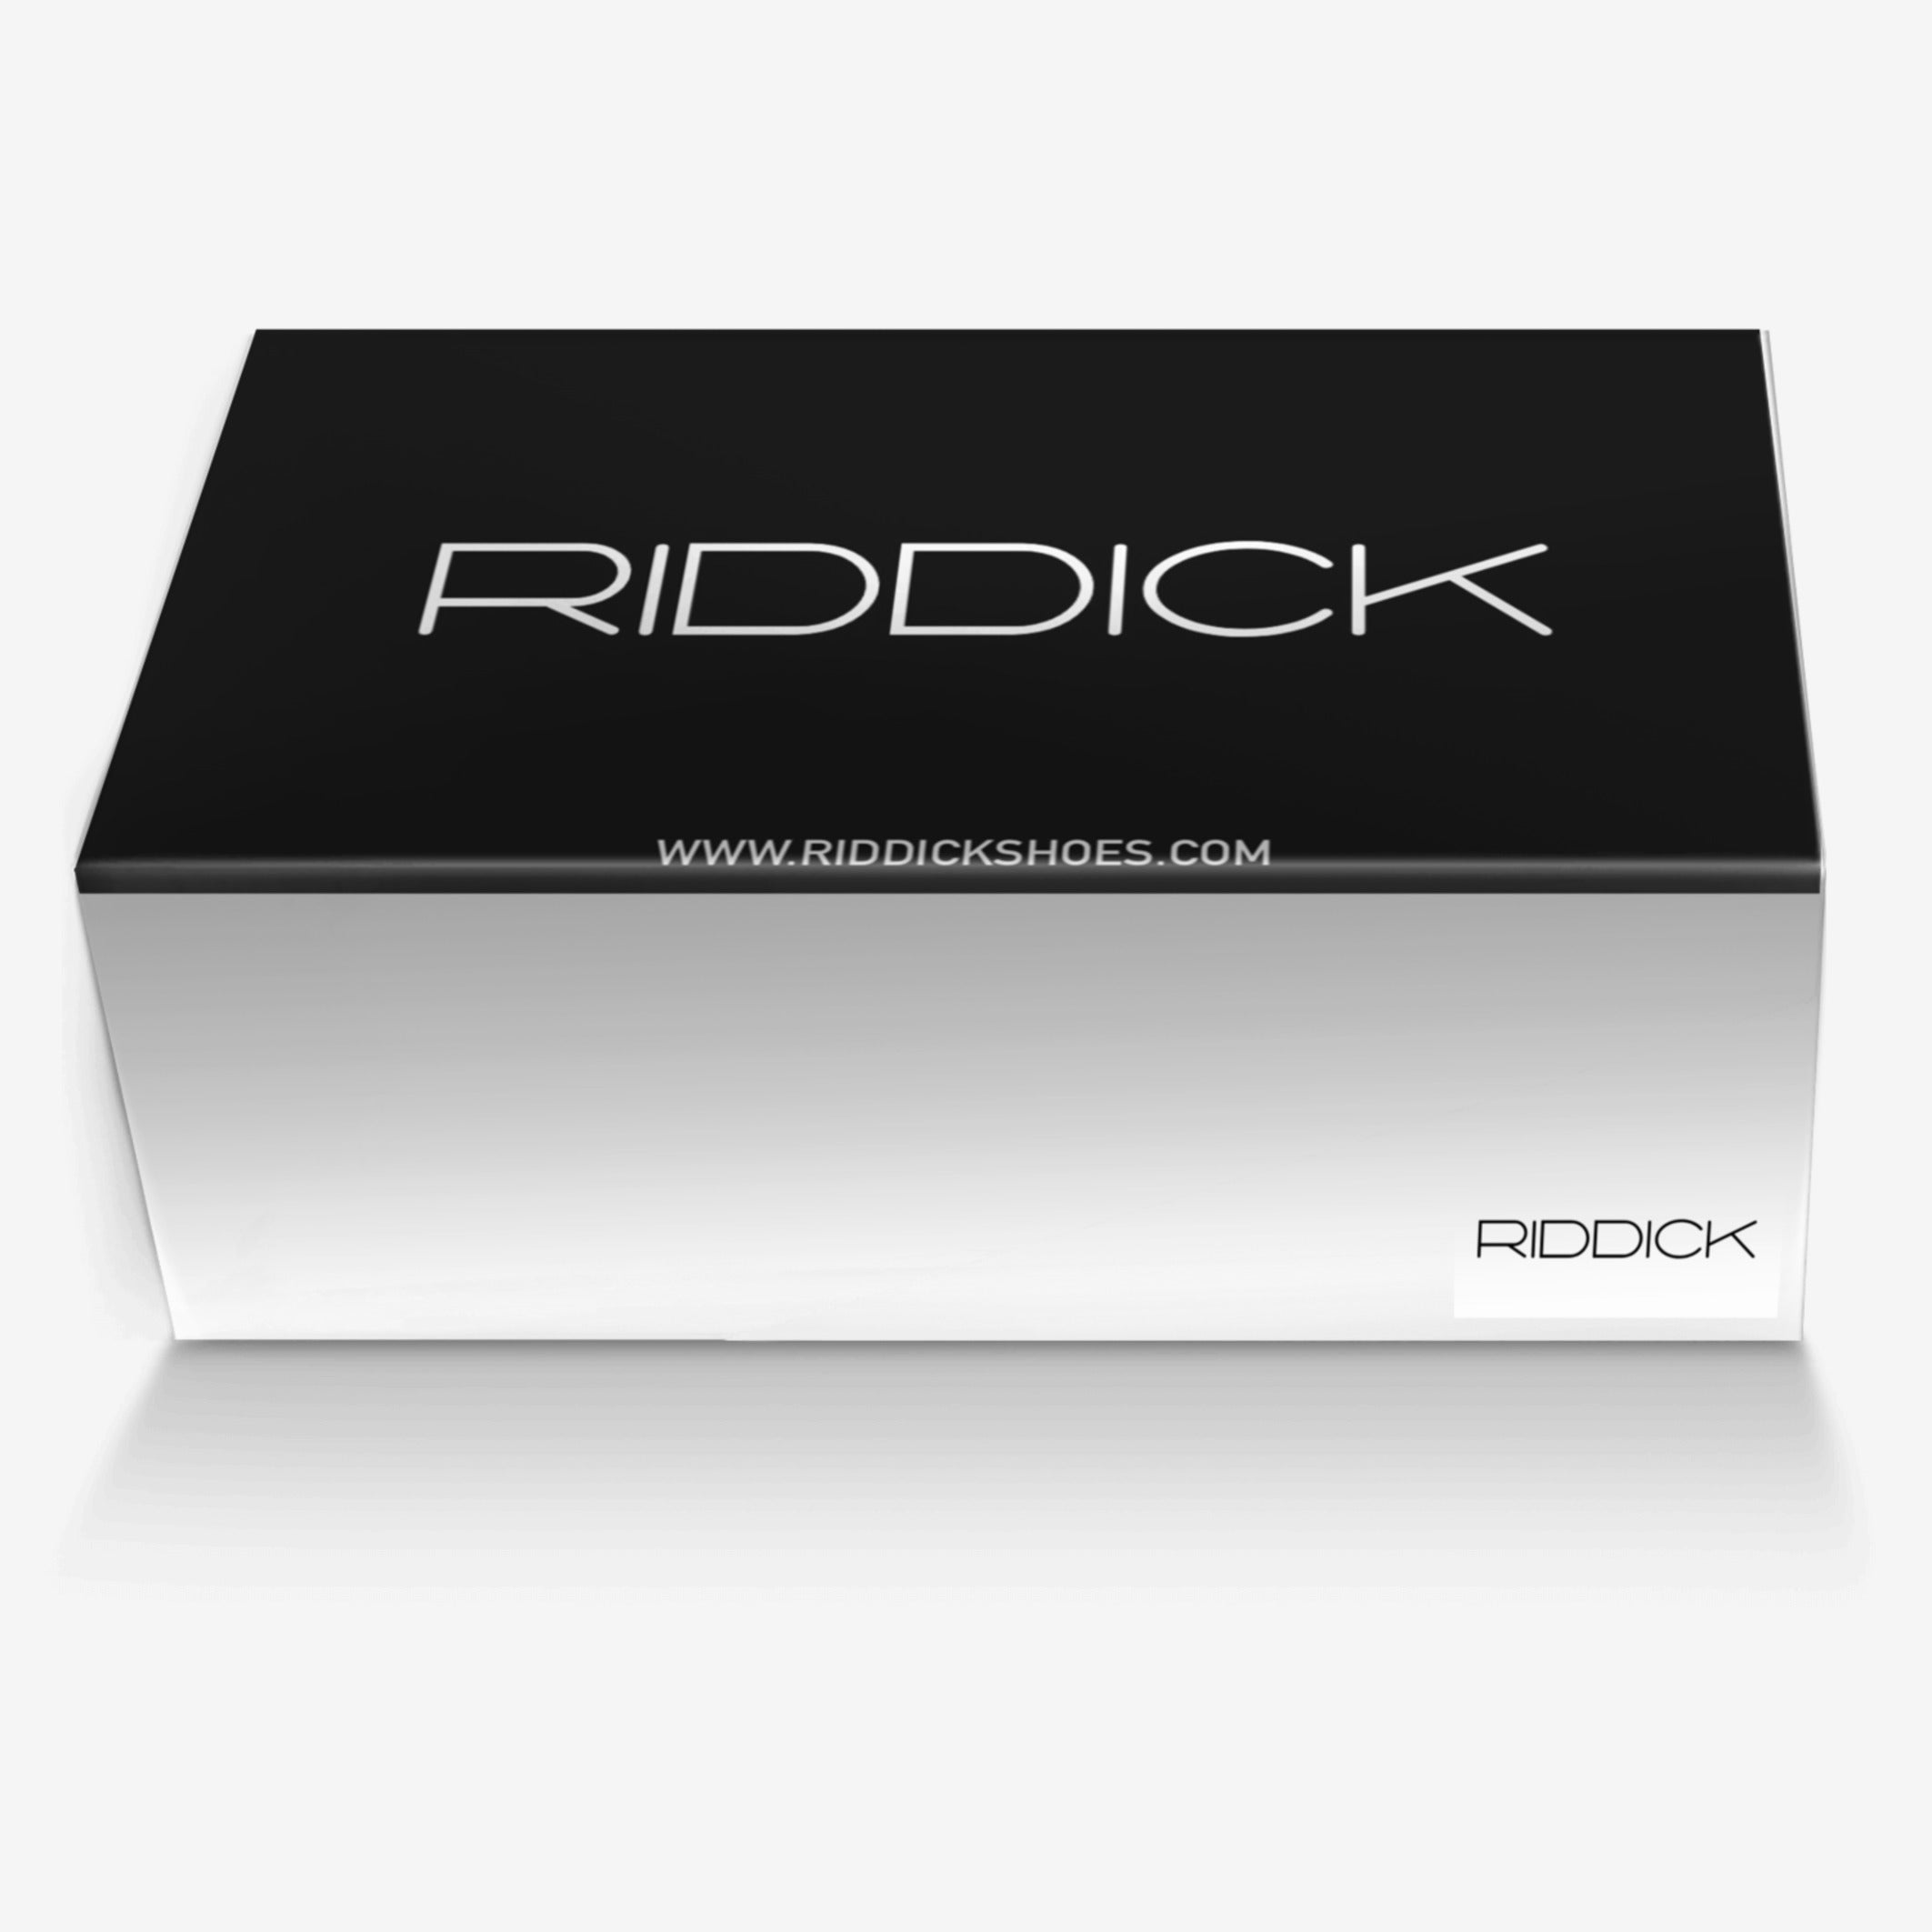 O.G. RIDDICK [UNISEX] - Riddick Shoes Shoe Riddick Shoes   